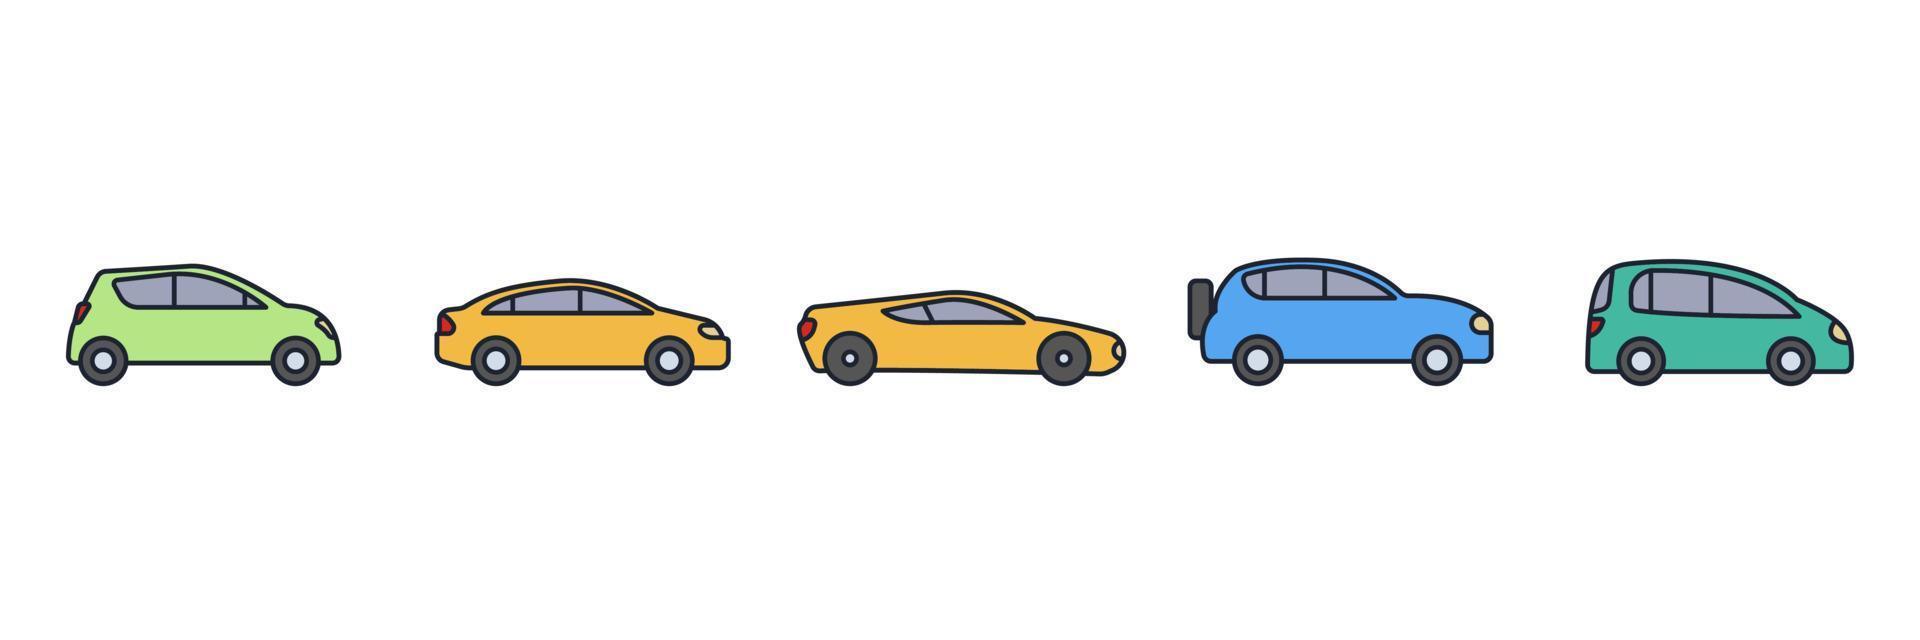 Auto-Transport-Set-Symbol-Symbol-Vorlage für Grafik- und Webdesign-Sammlung Logo-Vektor-Illustration vektor